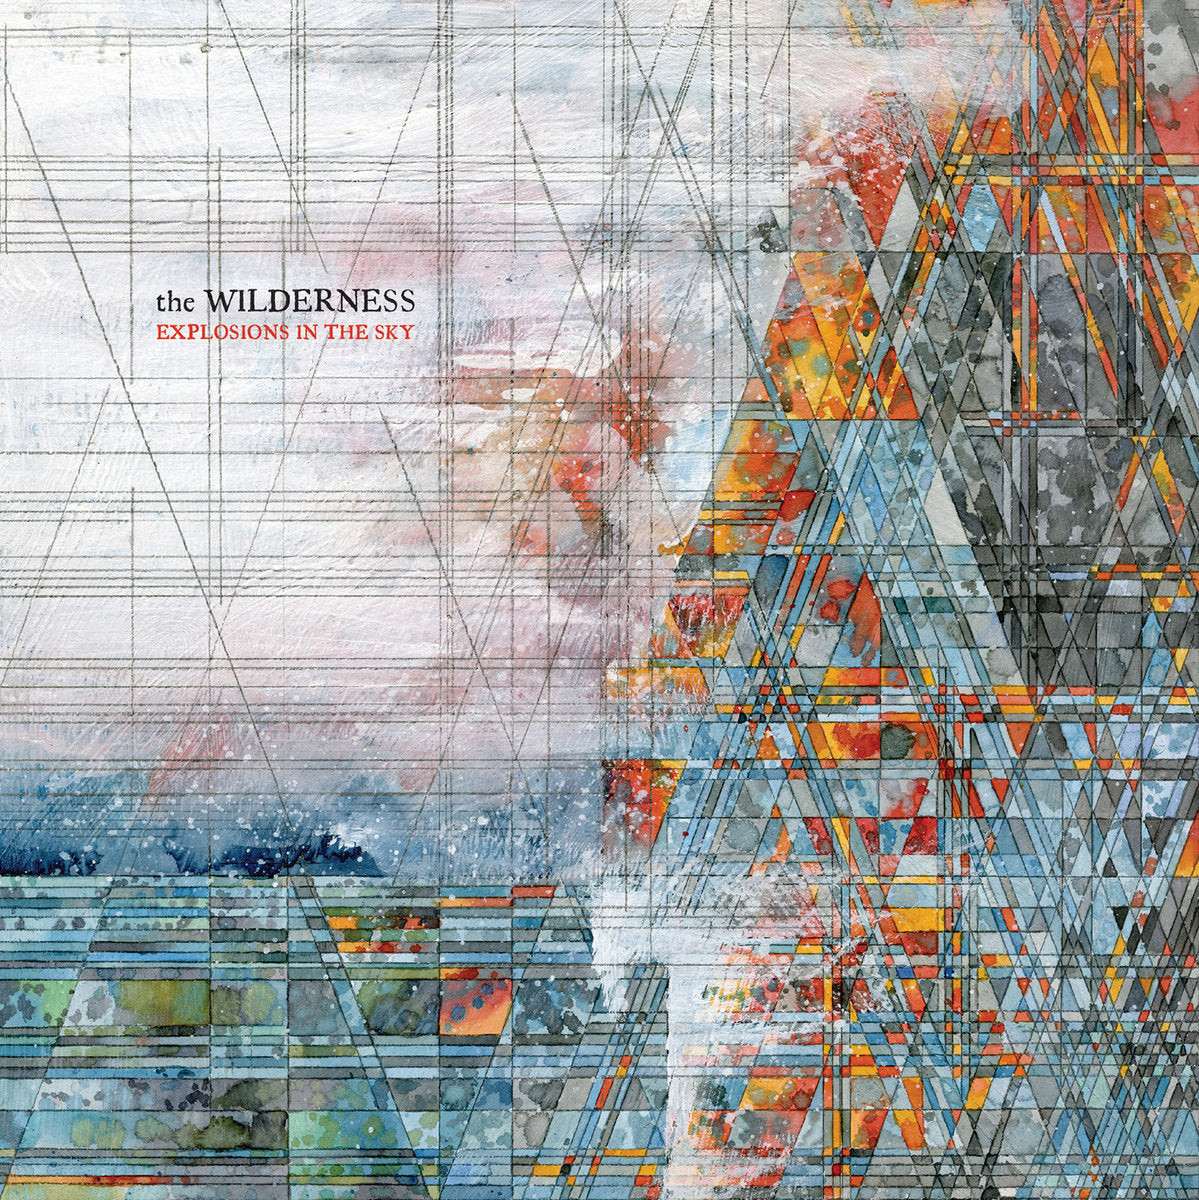 EXPLOSIONS IN THE SKY - THE WILDERNESS Vinyl 2xLP